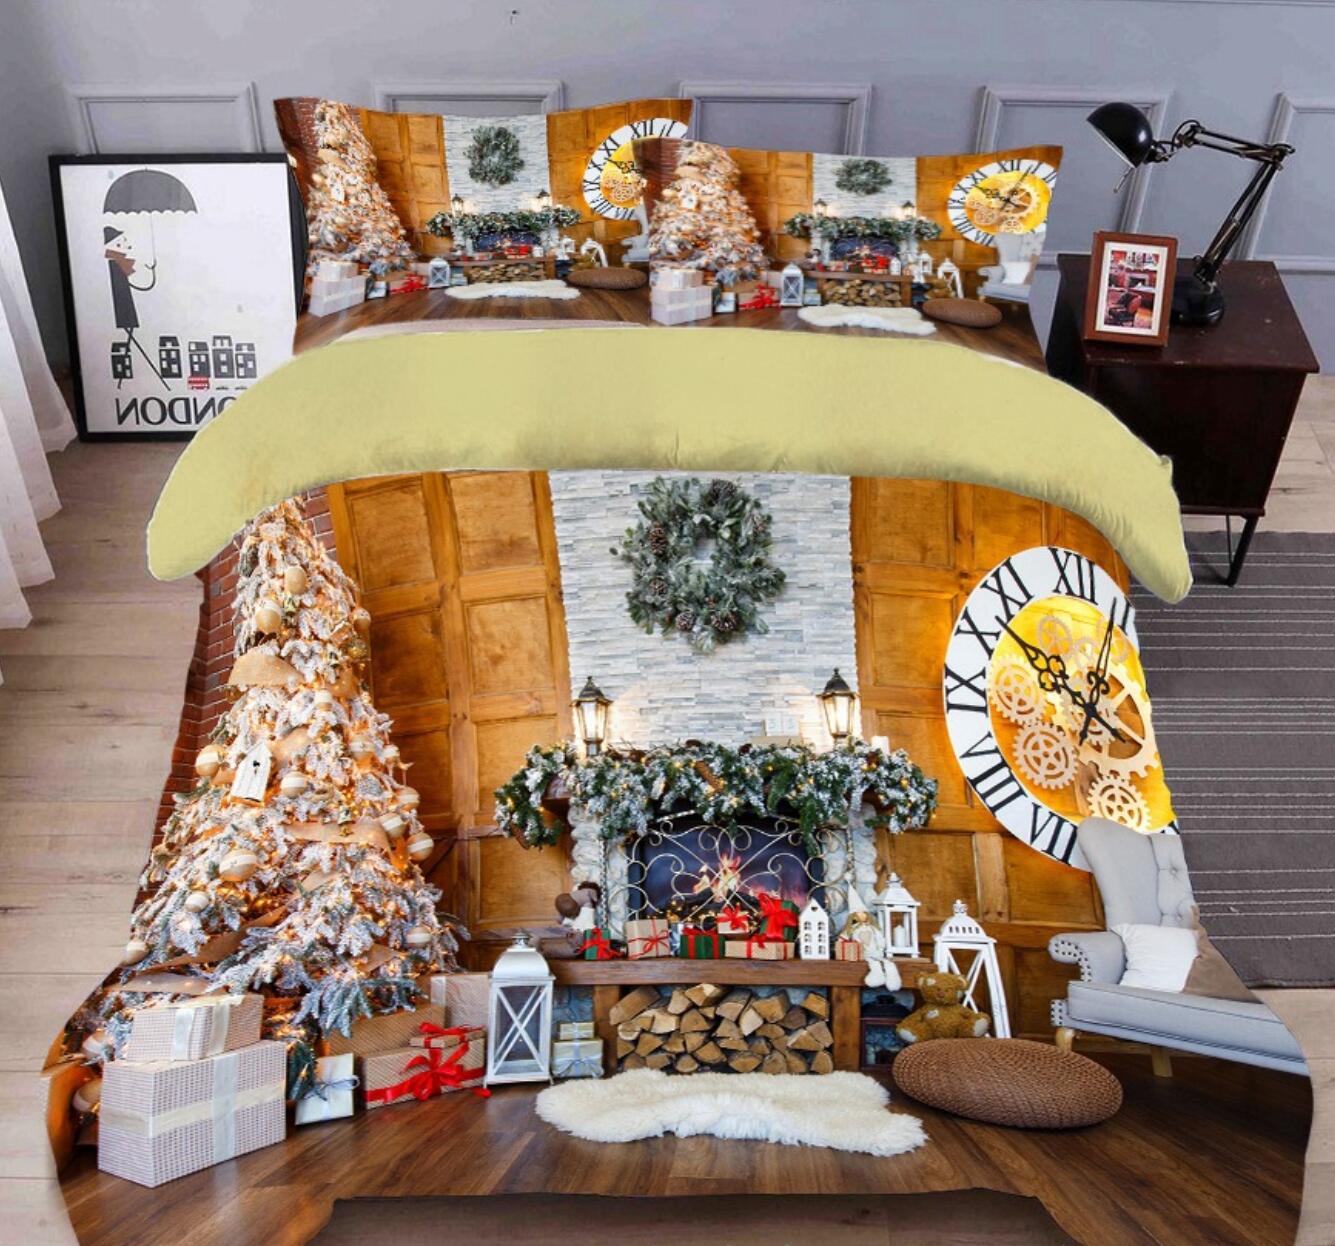 3D Room Christmas Tree 32004 Christmas Quilt Duvet Cover Xmas Bed Pillowcases